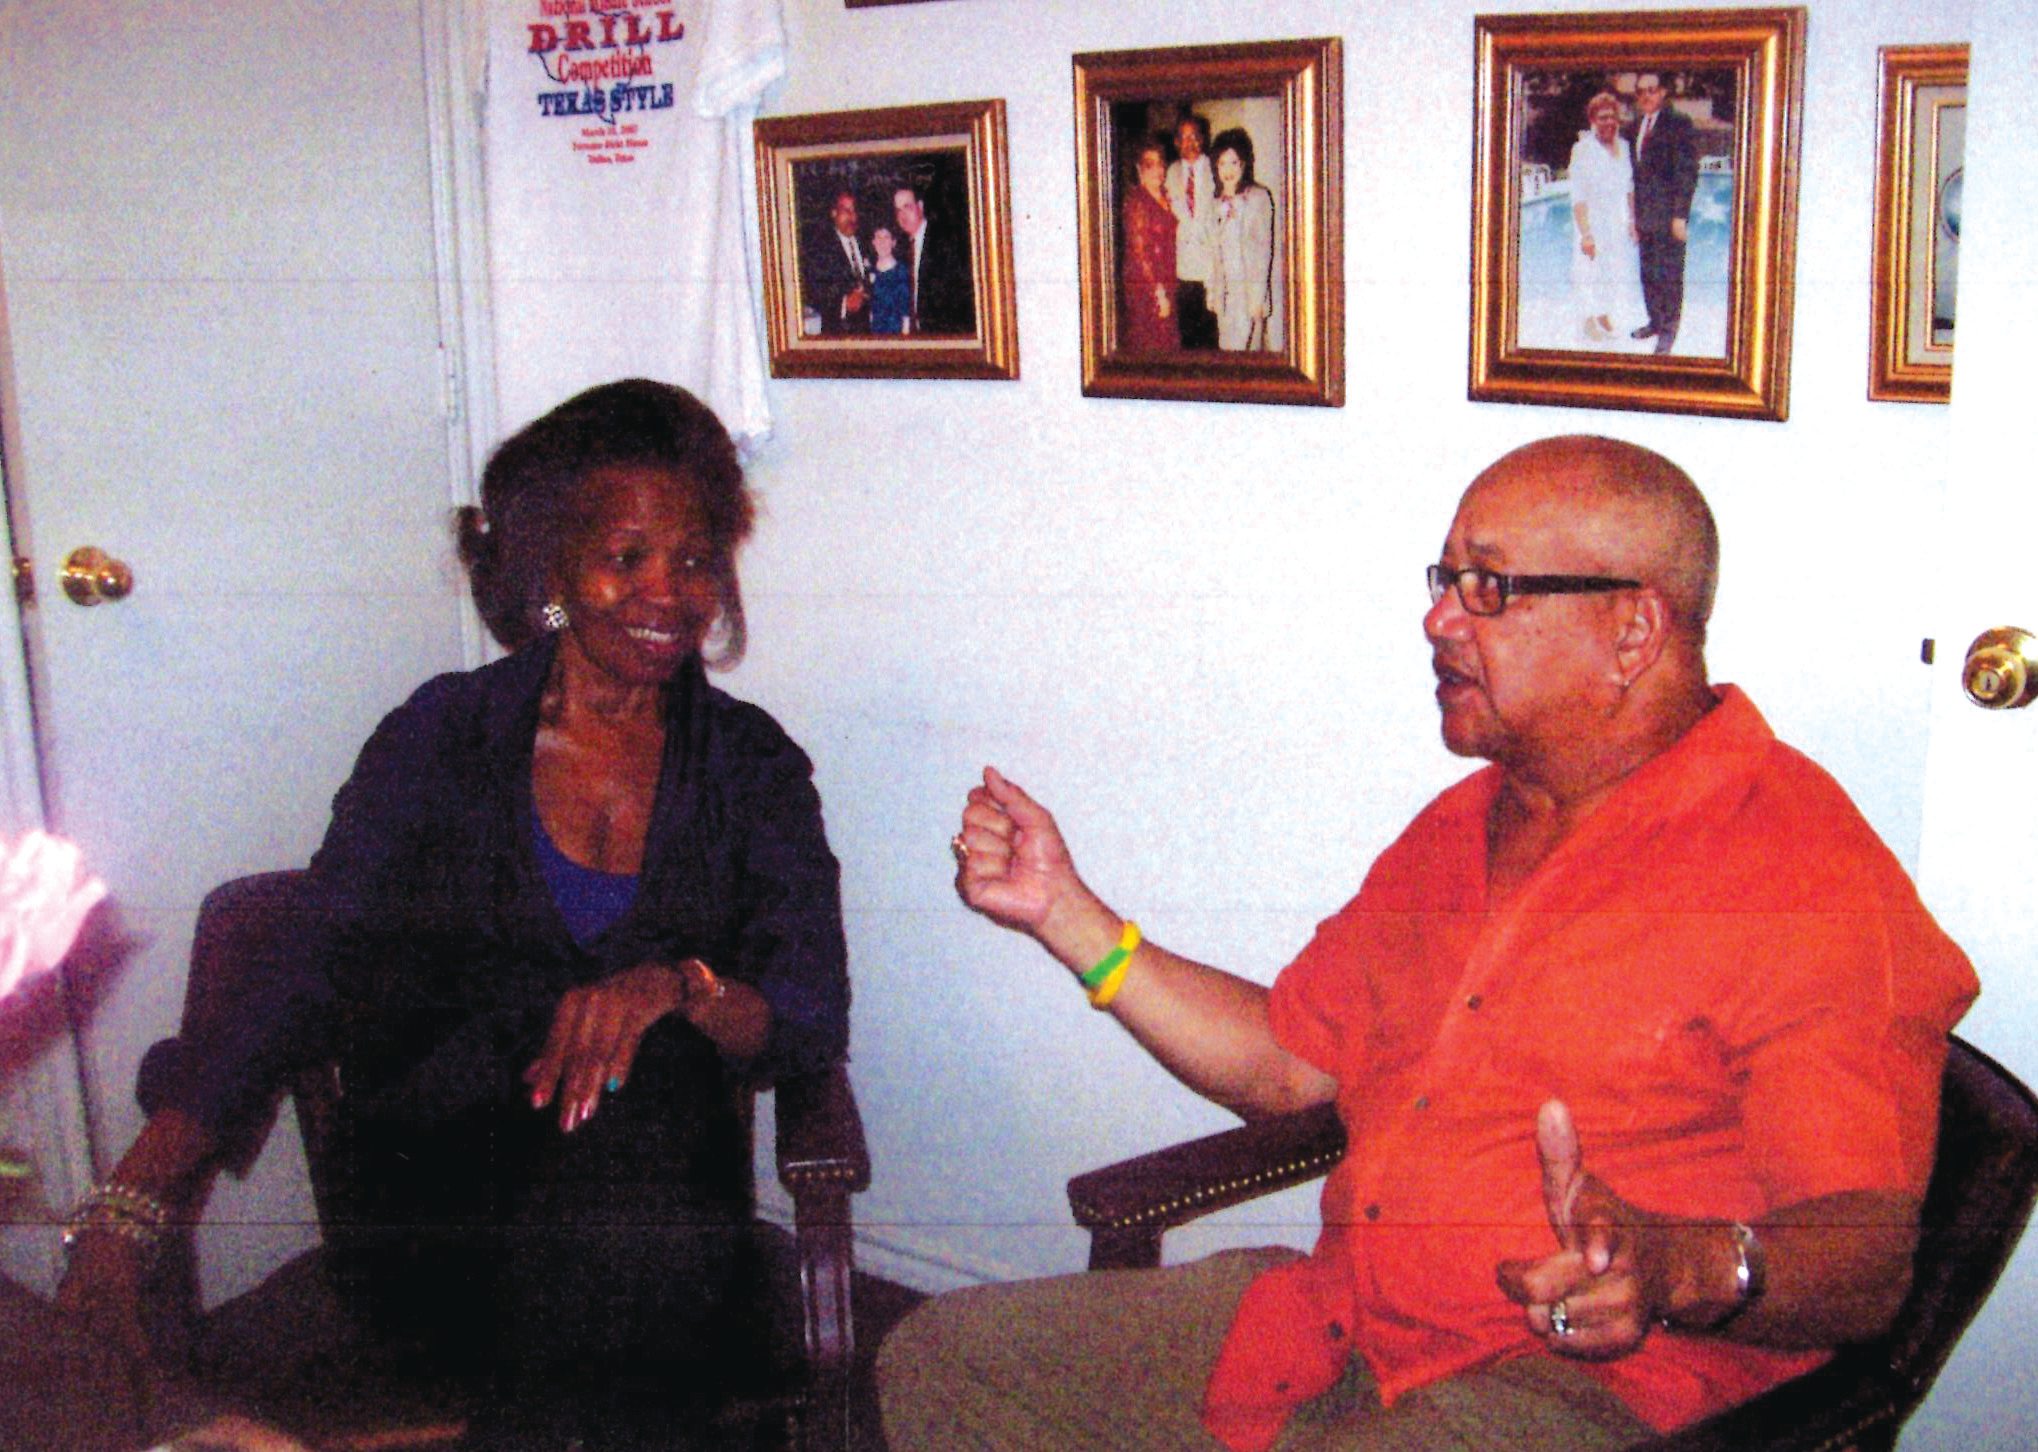 Ms. Ester Davis interviewing Mr. Leon Simon